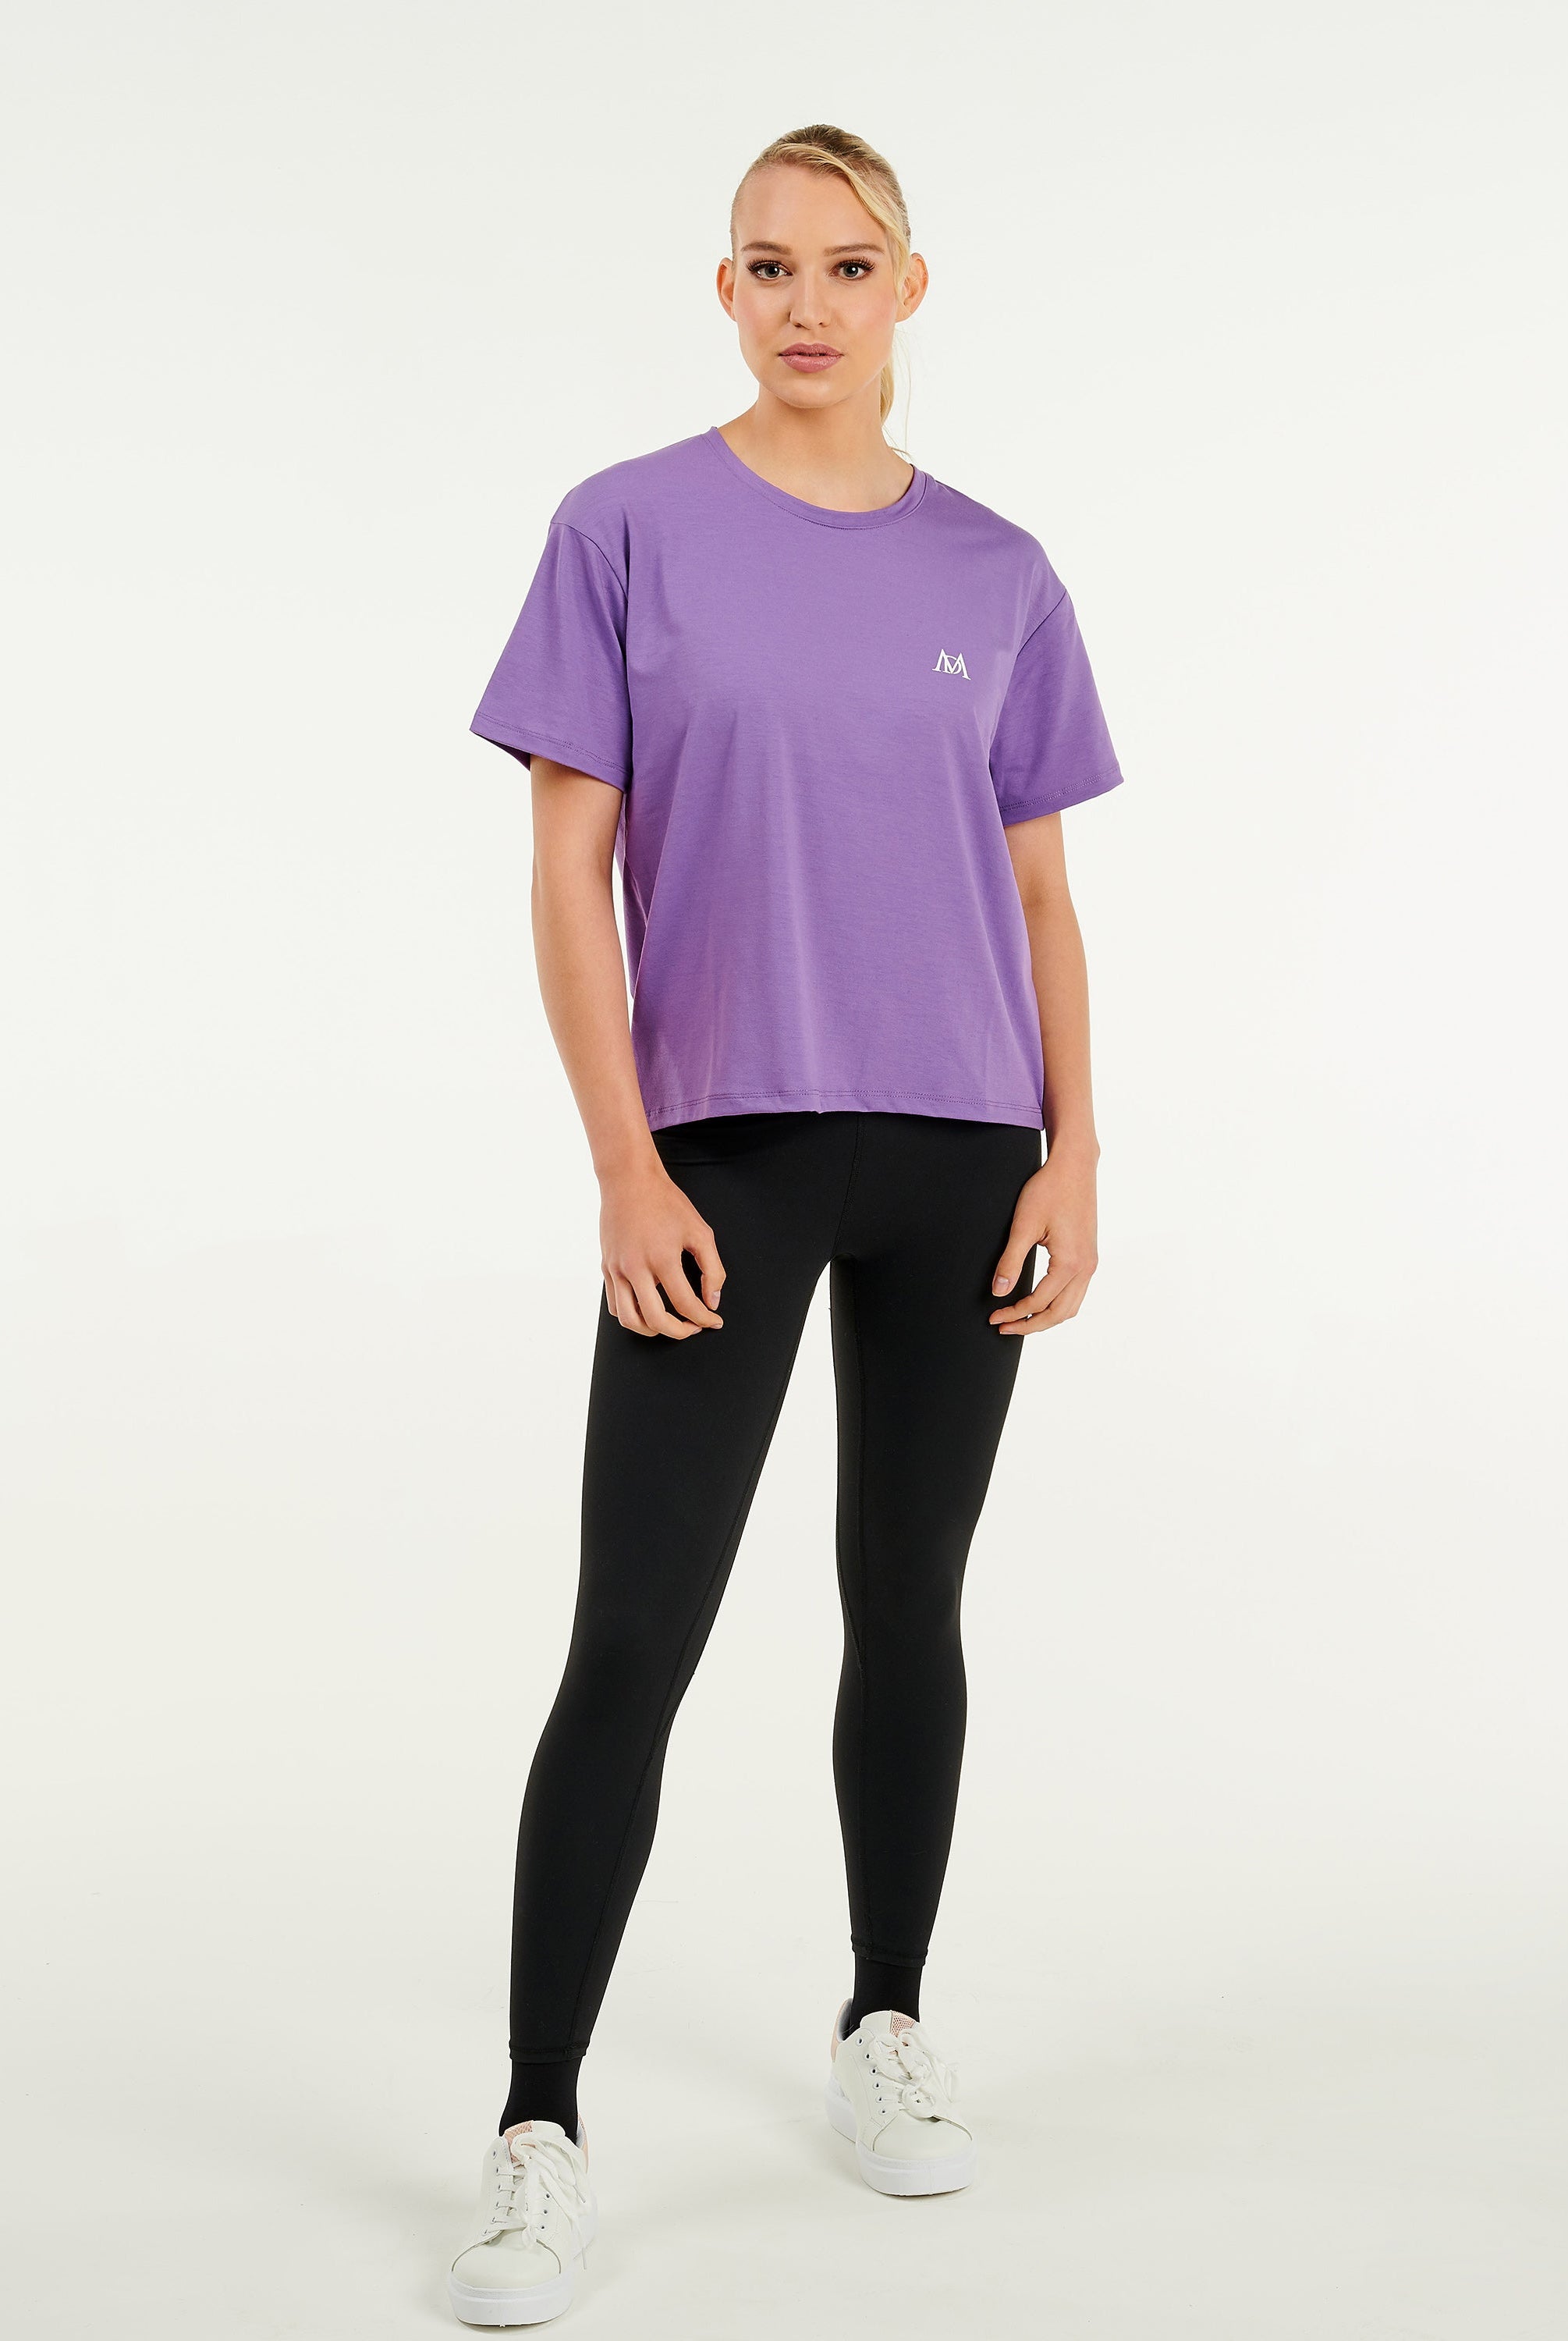 buy ladies purple t shirts online